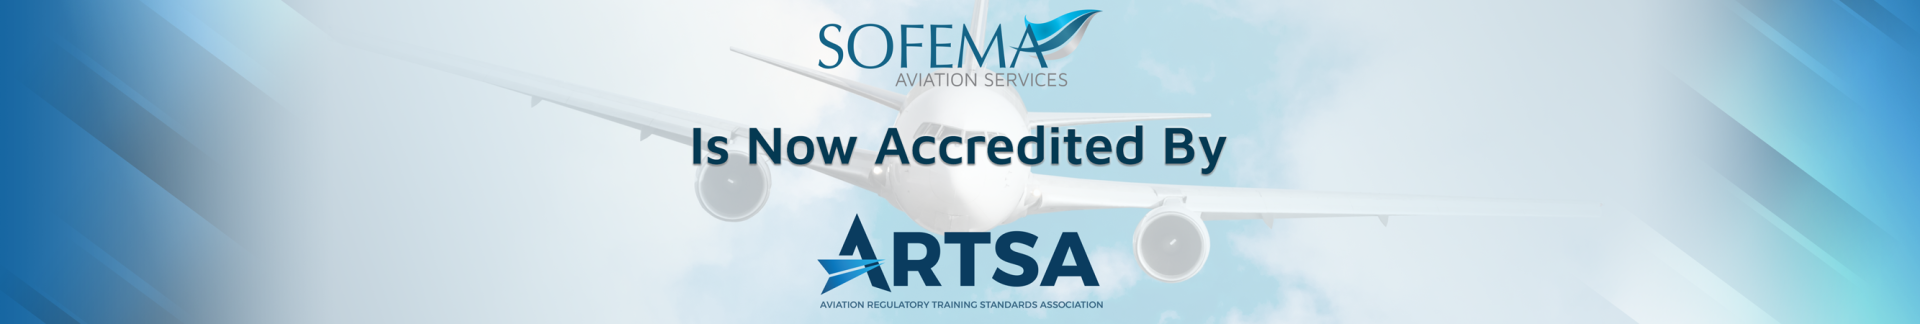 Sofema-Aviation-Services-Artsa-Membership-Banner